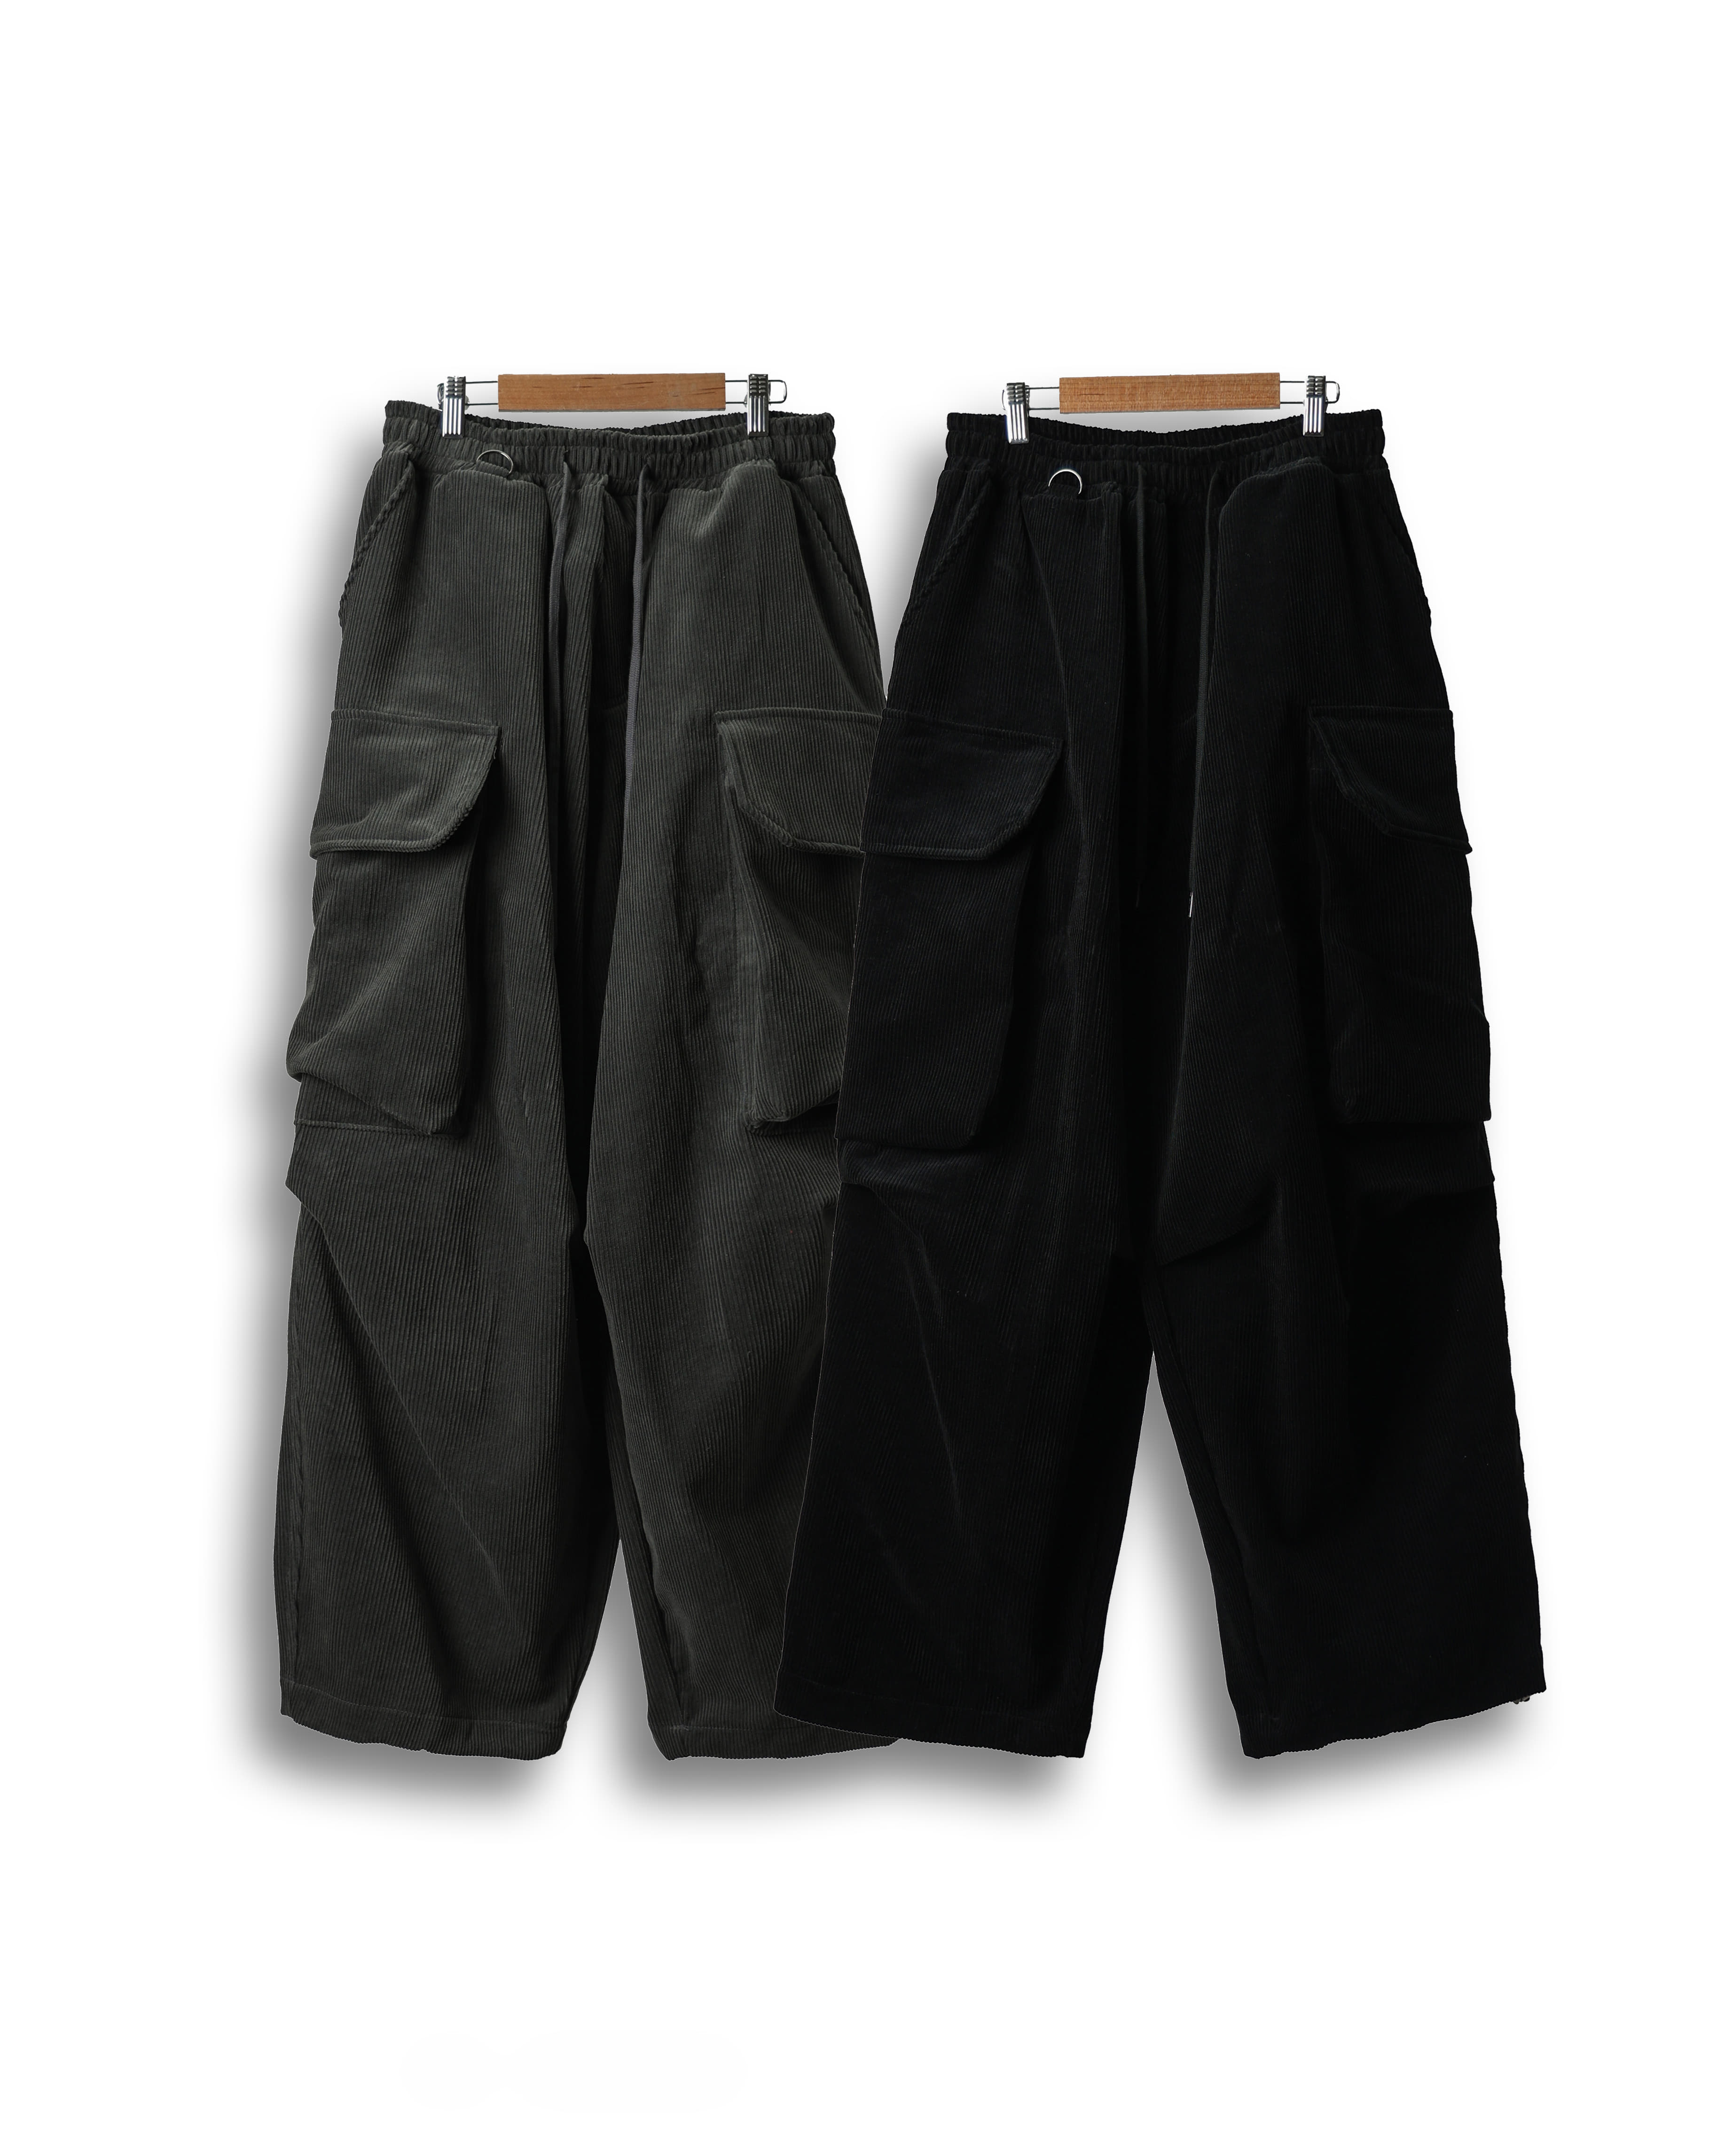 GRAM Military Corduroy Balloon Pants (Black/Charcoal)